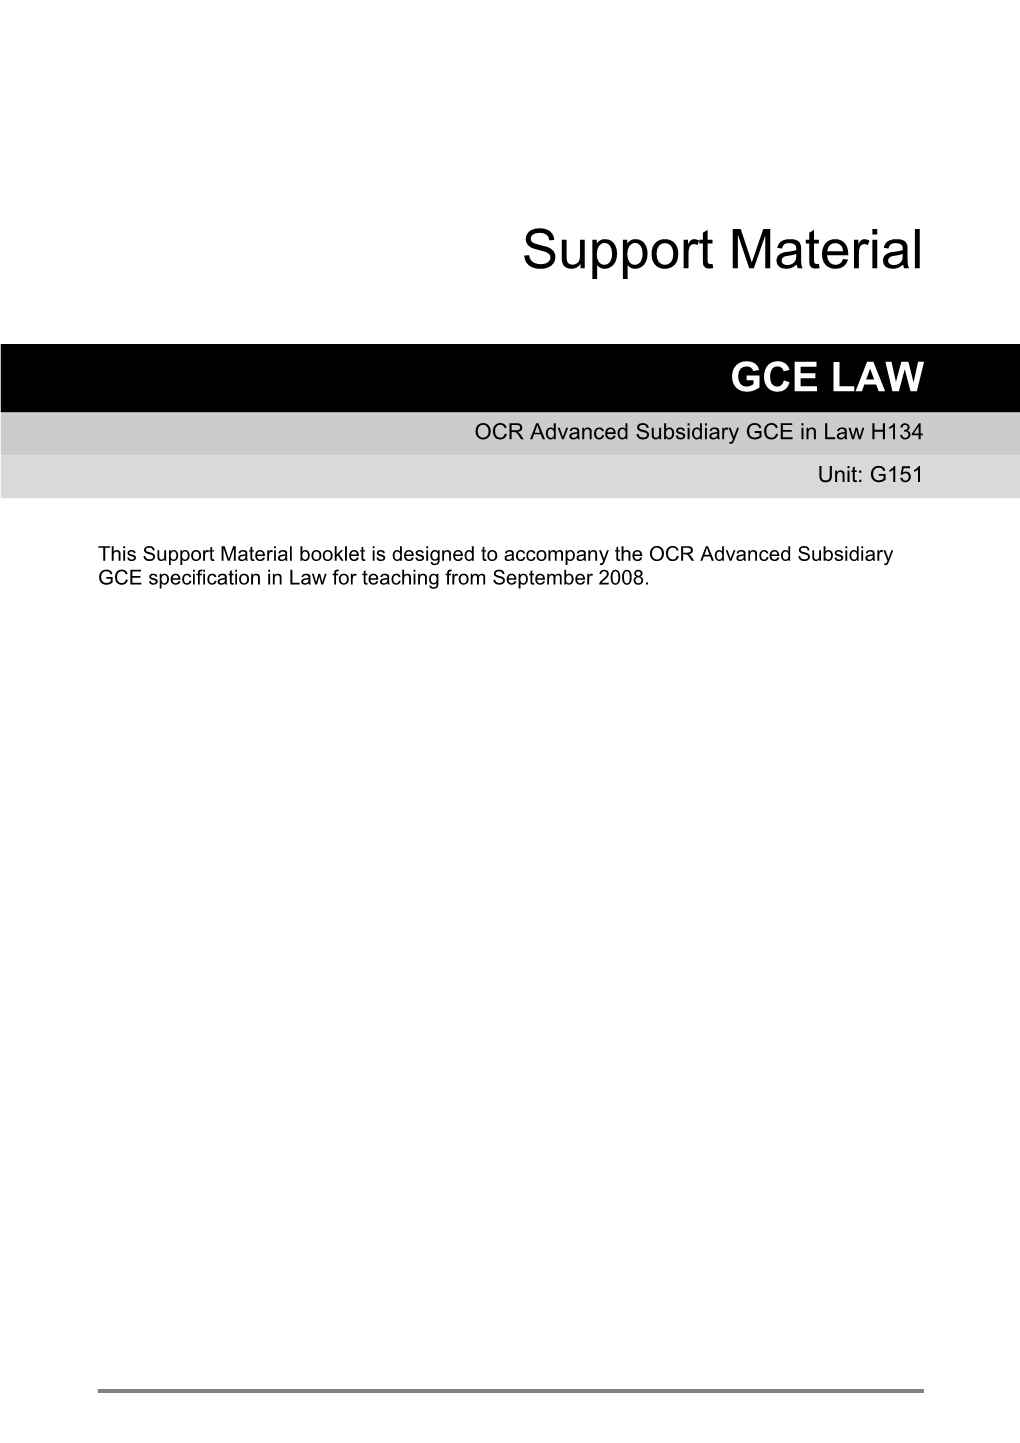 Schemes of Work: GCE Law H134: Unit G151